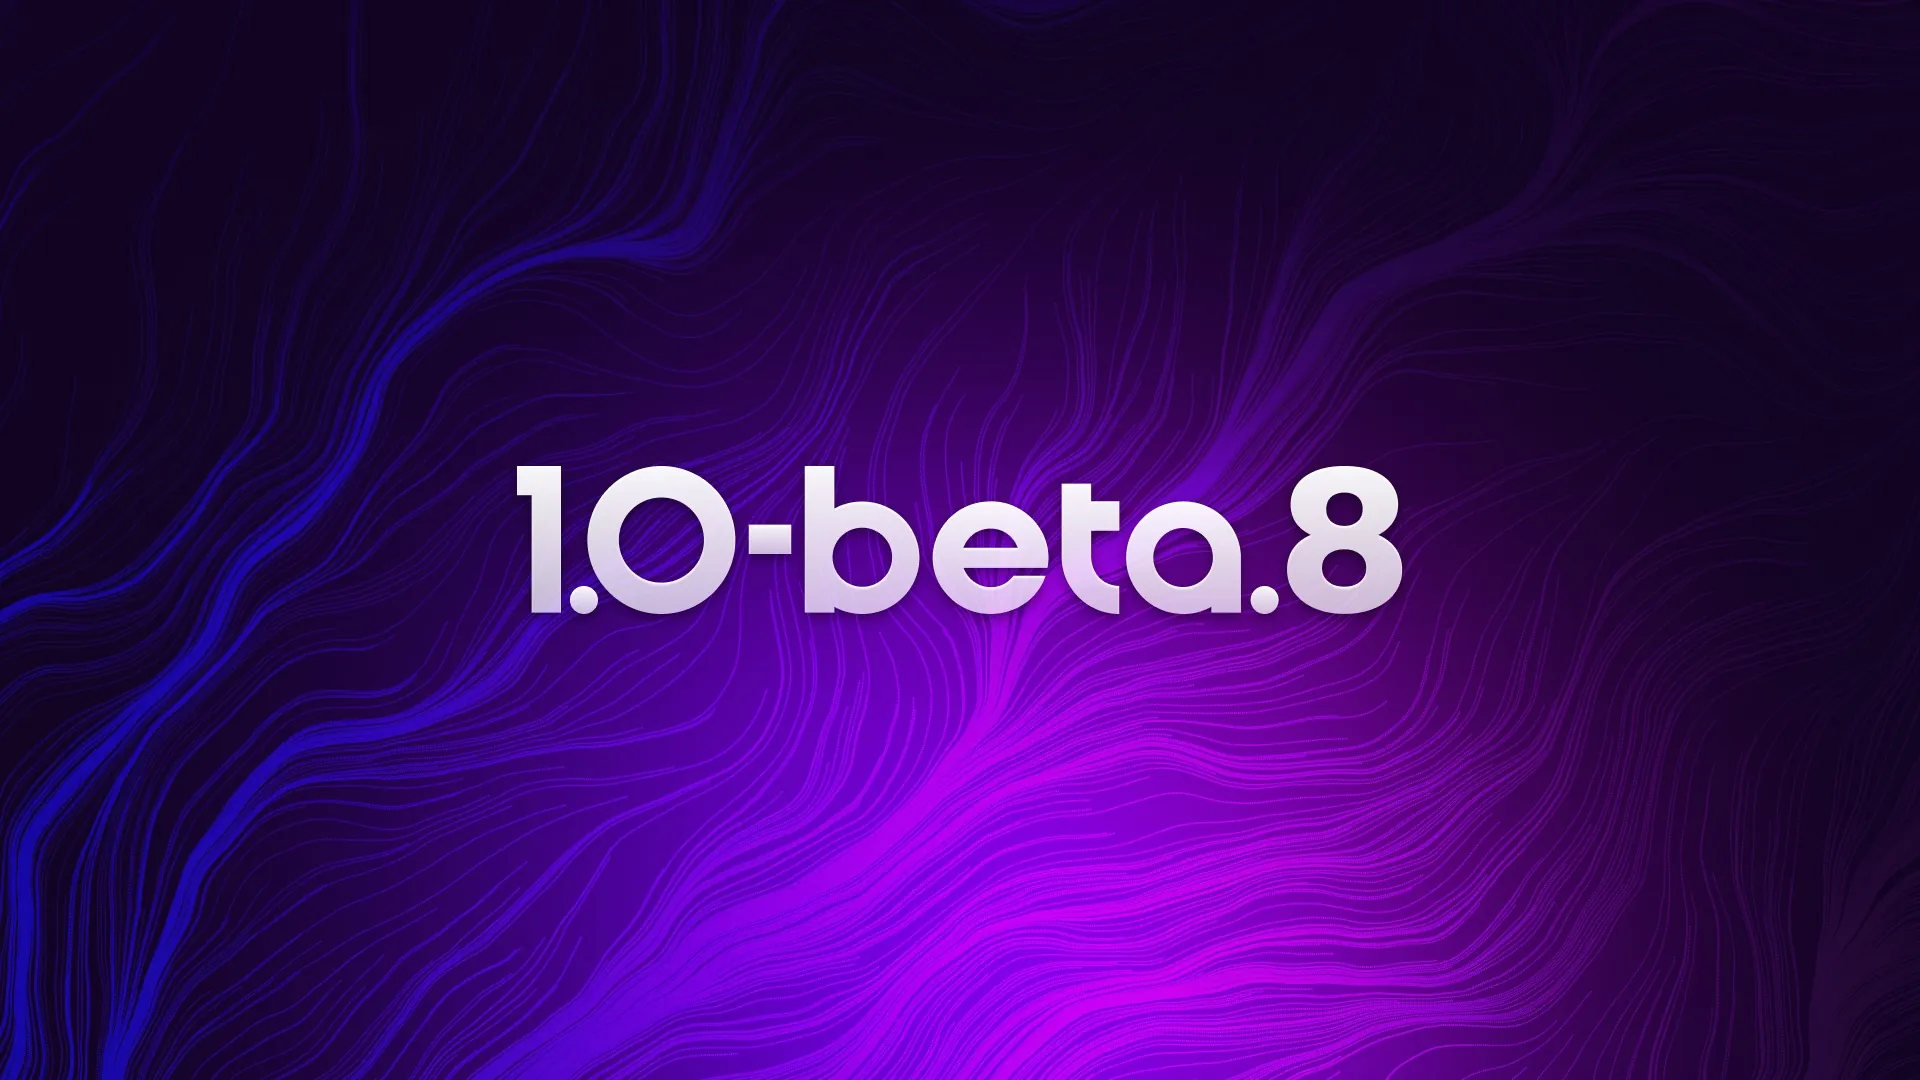 Release v1.0.0-beta.8